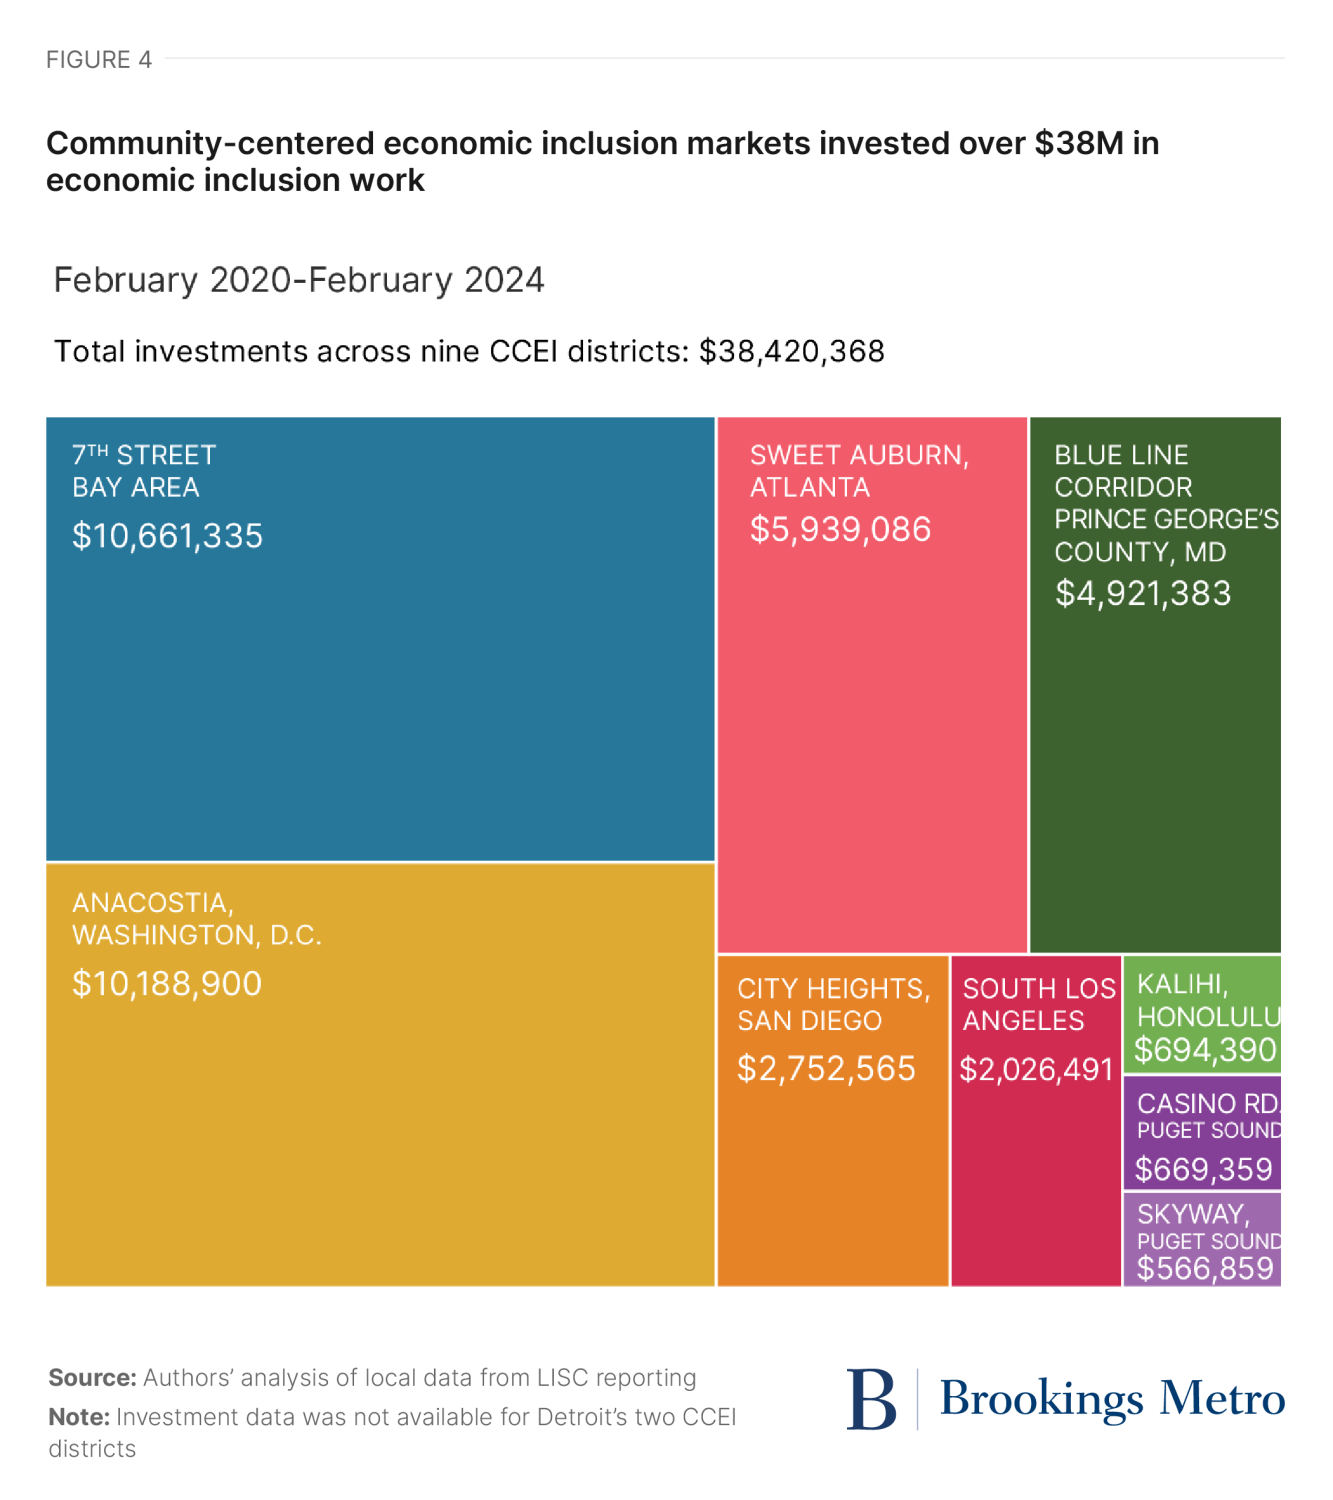 Figure 4. Community-centered economic inclusion markets invested over $38M in economic inclusion work